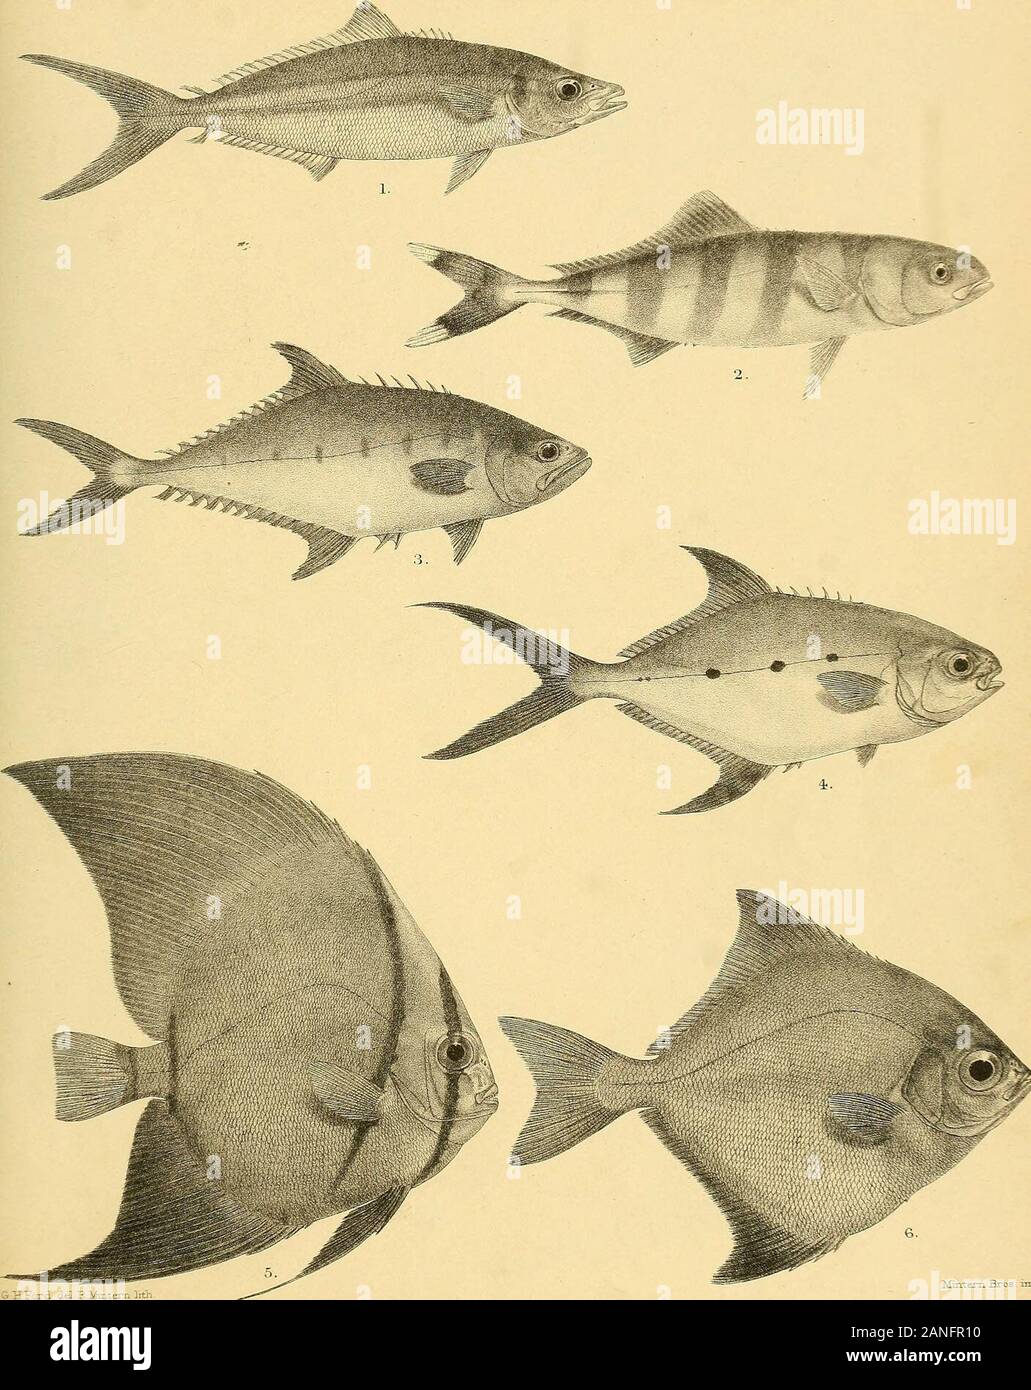 The fishes of India; being a natural history of the fishes known to inhabit the seas and fresh waters of India, Burma, and Ceylon . G.H Ford del Suziii Mi. Mmiera Bros. imp. 1. CARANX OBLONGUS. 2.C. ARMATUS. 3.C.GALLUS. 4. C. LEPTOLEPIS. 5. C. NIGRIPINNIS. 6. SERIOLA NIGRO - FASCIATA. Bays Fish.es of India. .- I i , 3d - Mmtern ]ith y-r-tem Bros nrjp- ] SERTOLICHTHYS BIPINNULATUS. 2, NAUCRATES DUCTOR. 3, CHORINEMUS TOLOO. 4-, TRACHYNOTUS BAILL0N1. ^ 5. PLATAX VESPERT1LIO. -6,PSETTUS EALCIFORMIS Days Fish.es of India Plate LIB. Stock Photo